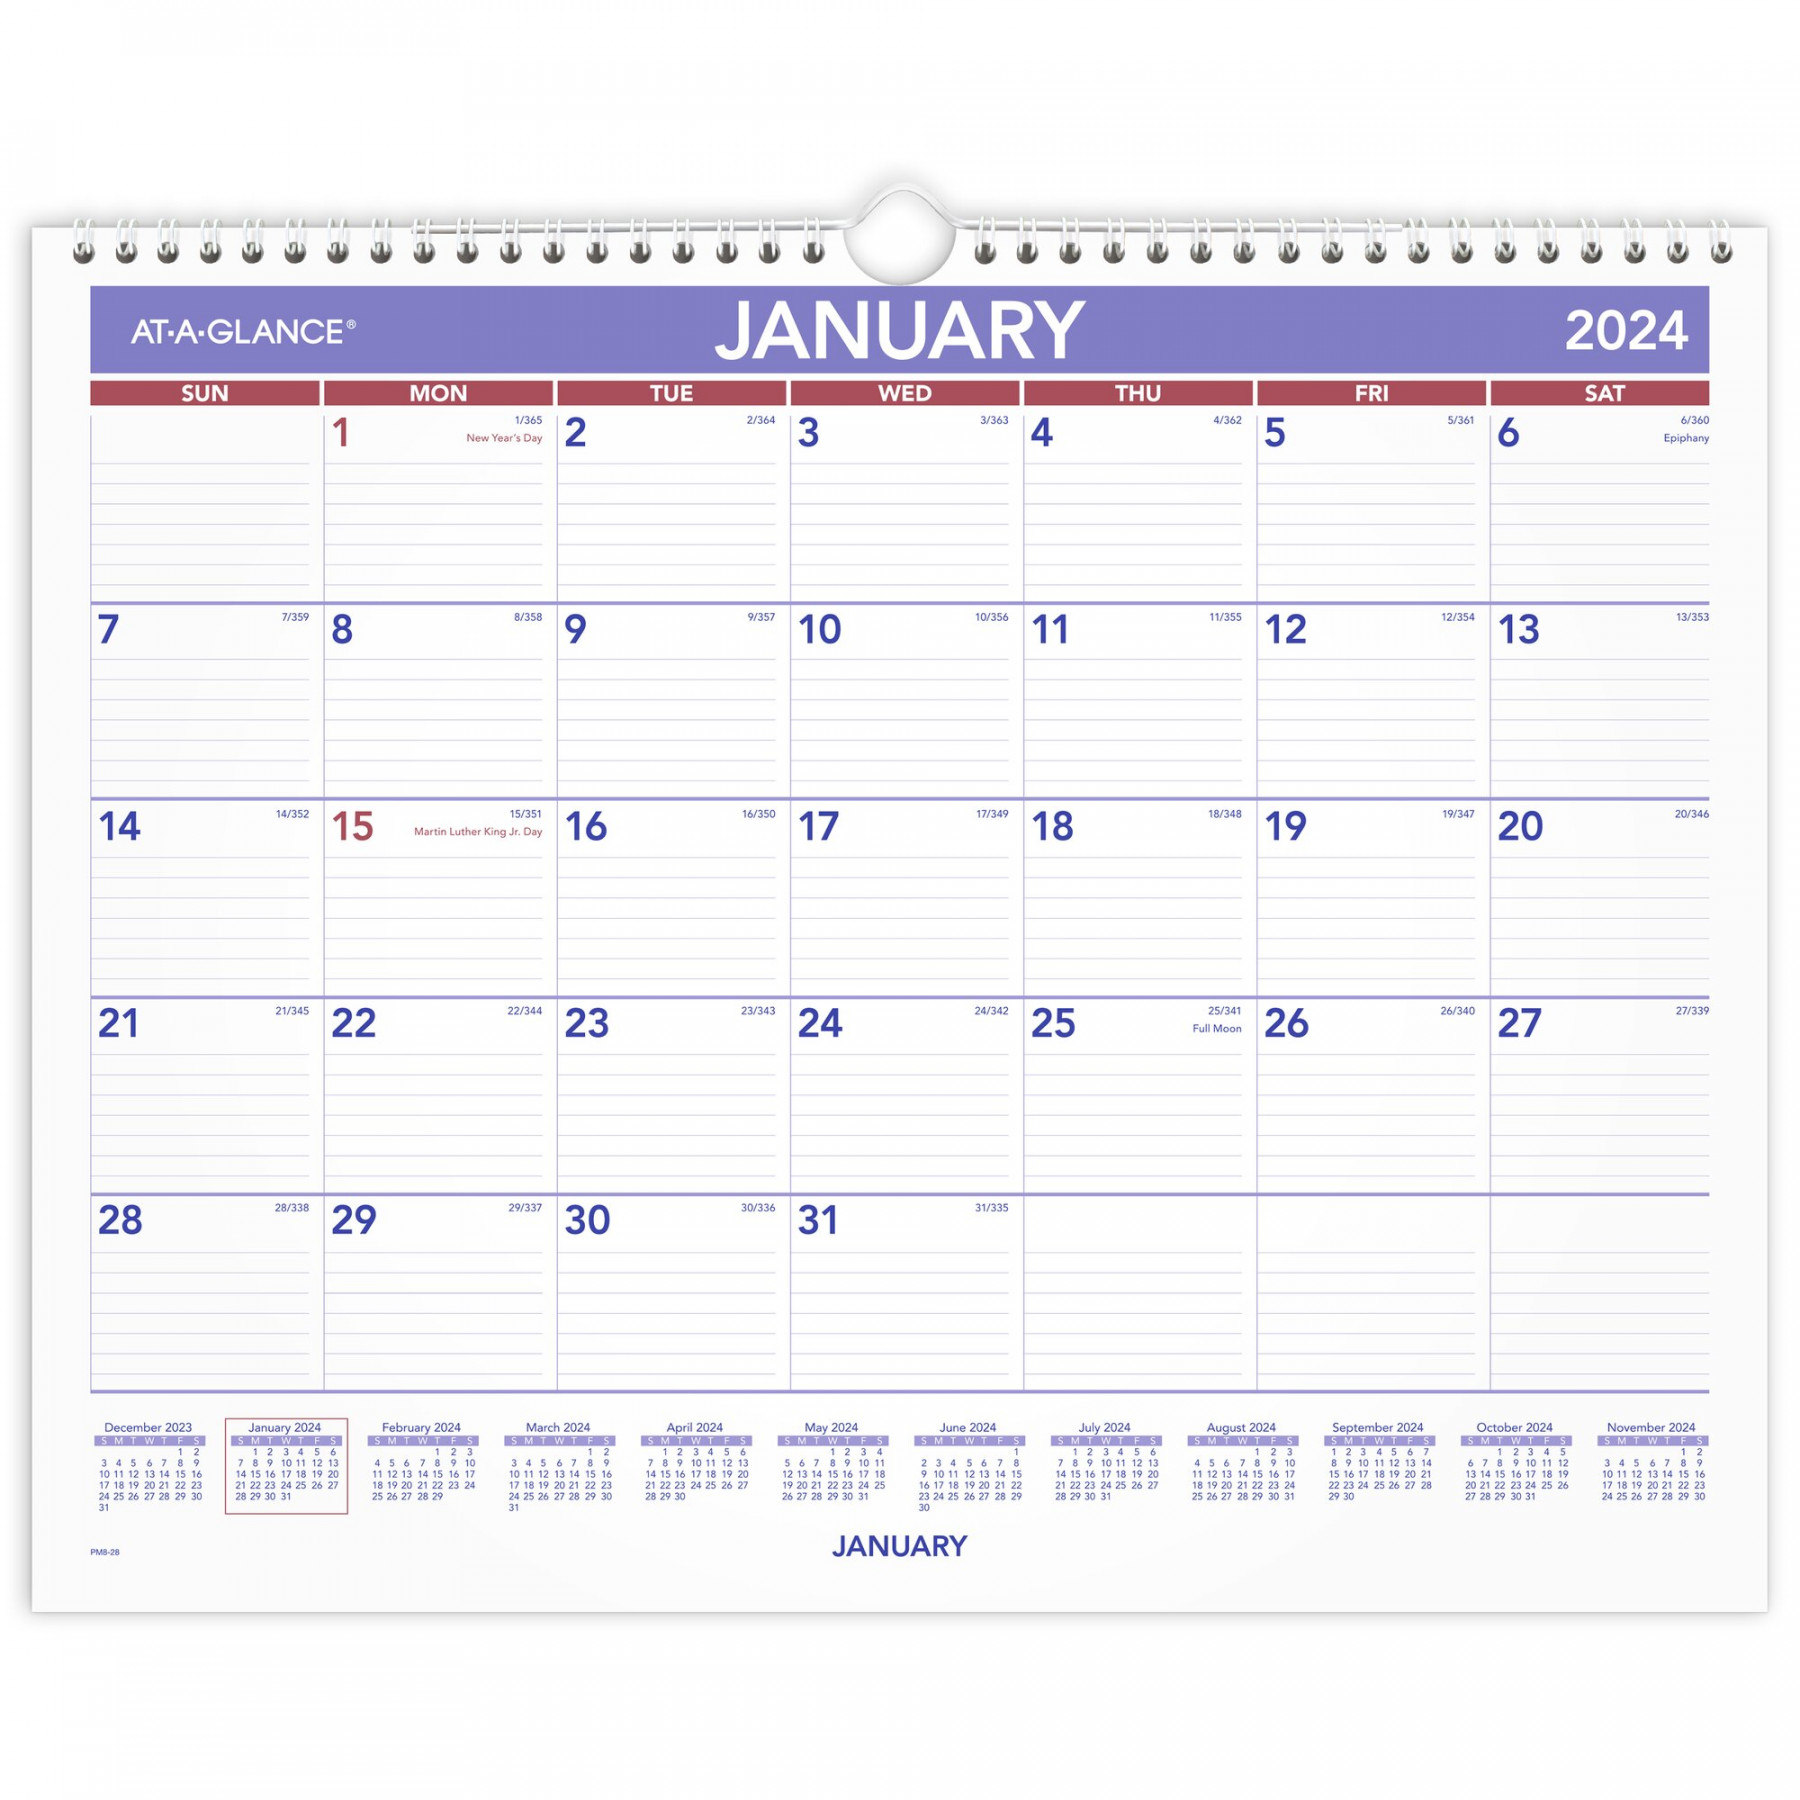 AT-A-GLANCE  Monthly Wall Calendar Medium  x  - Monthly Wall  Calendars